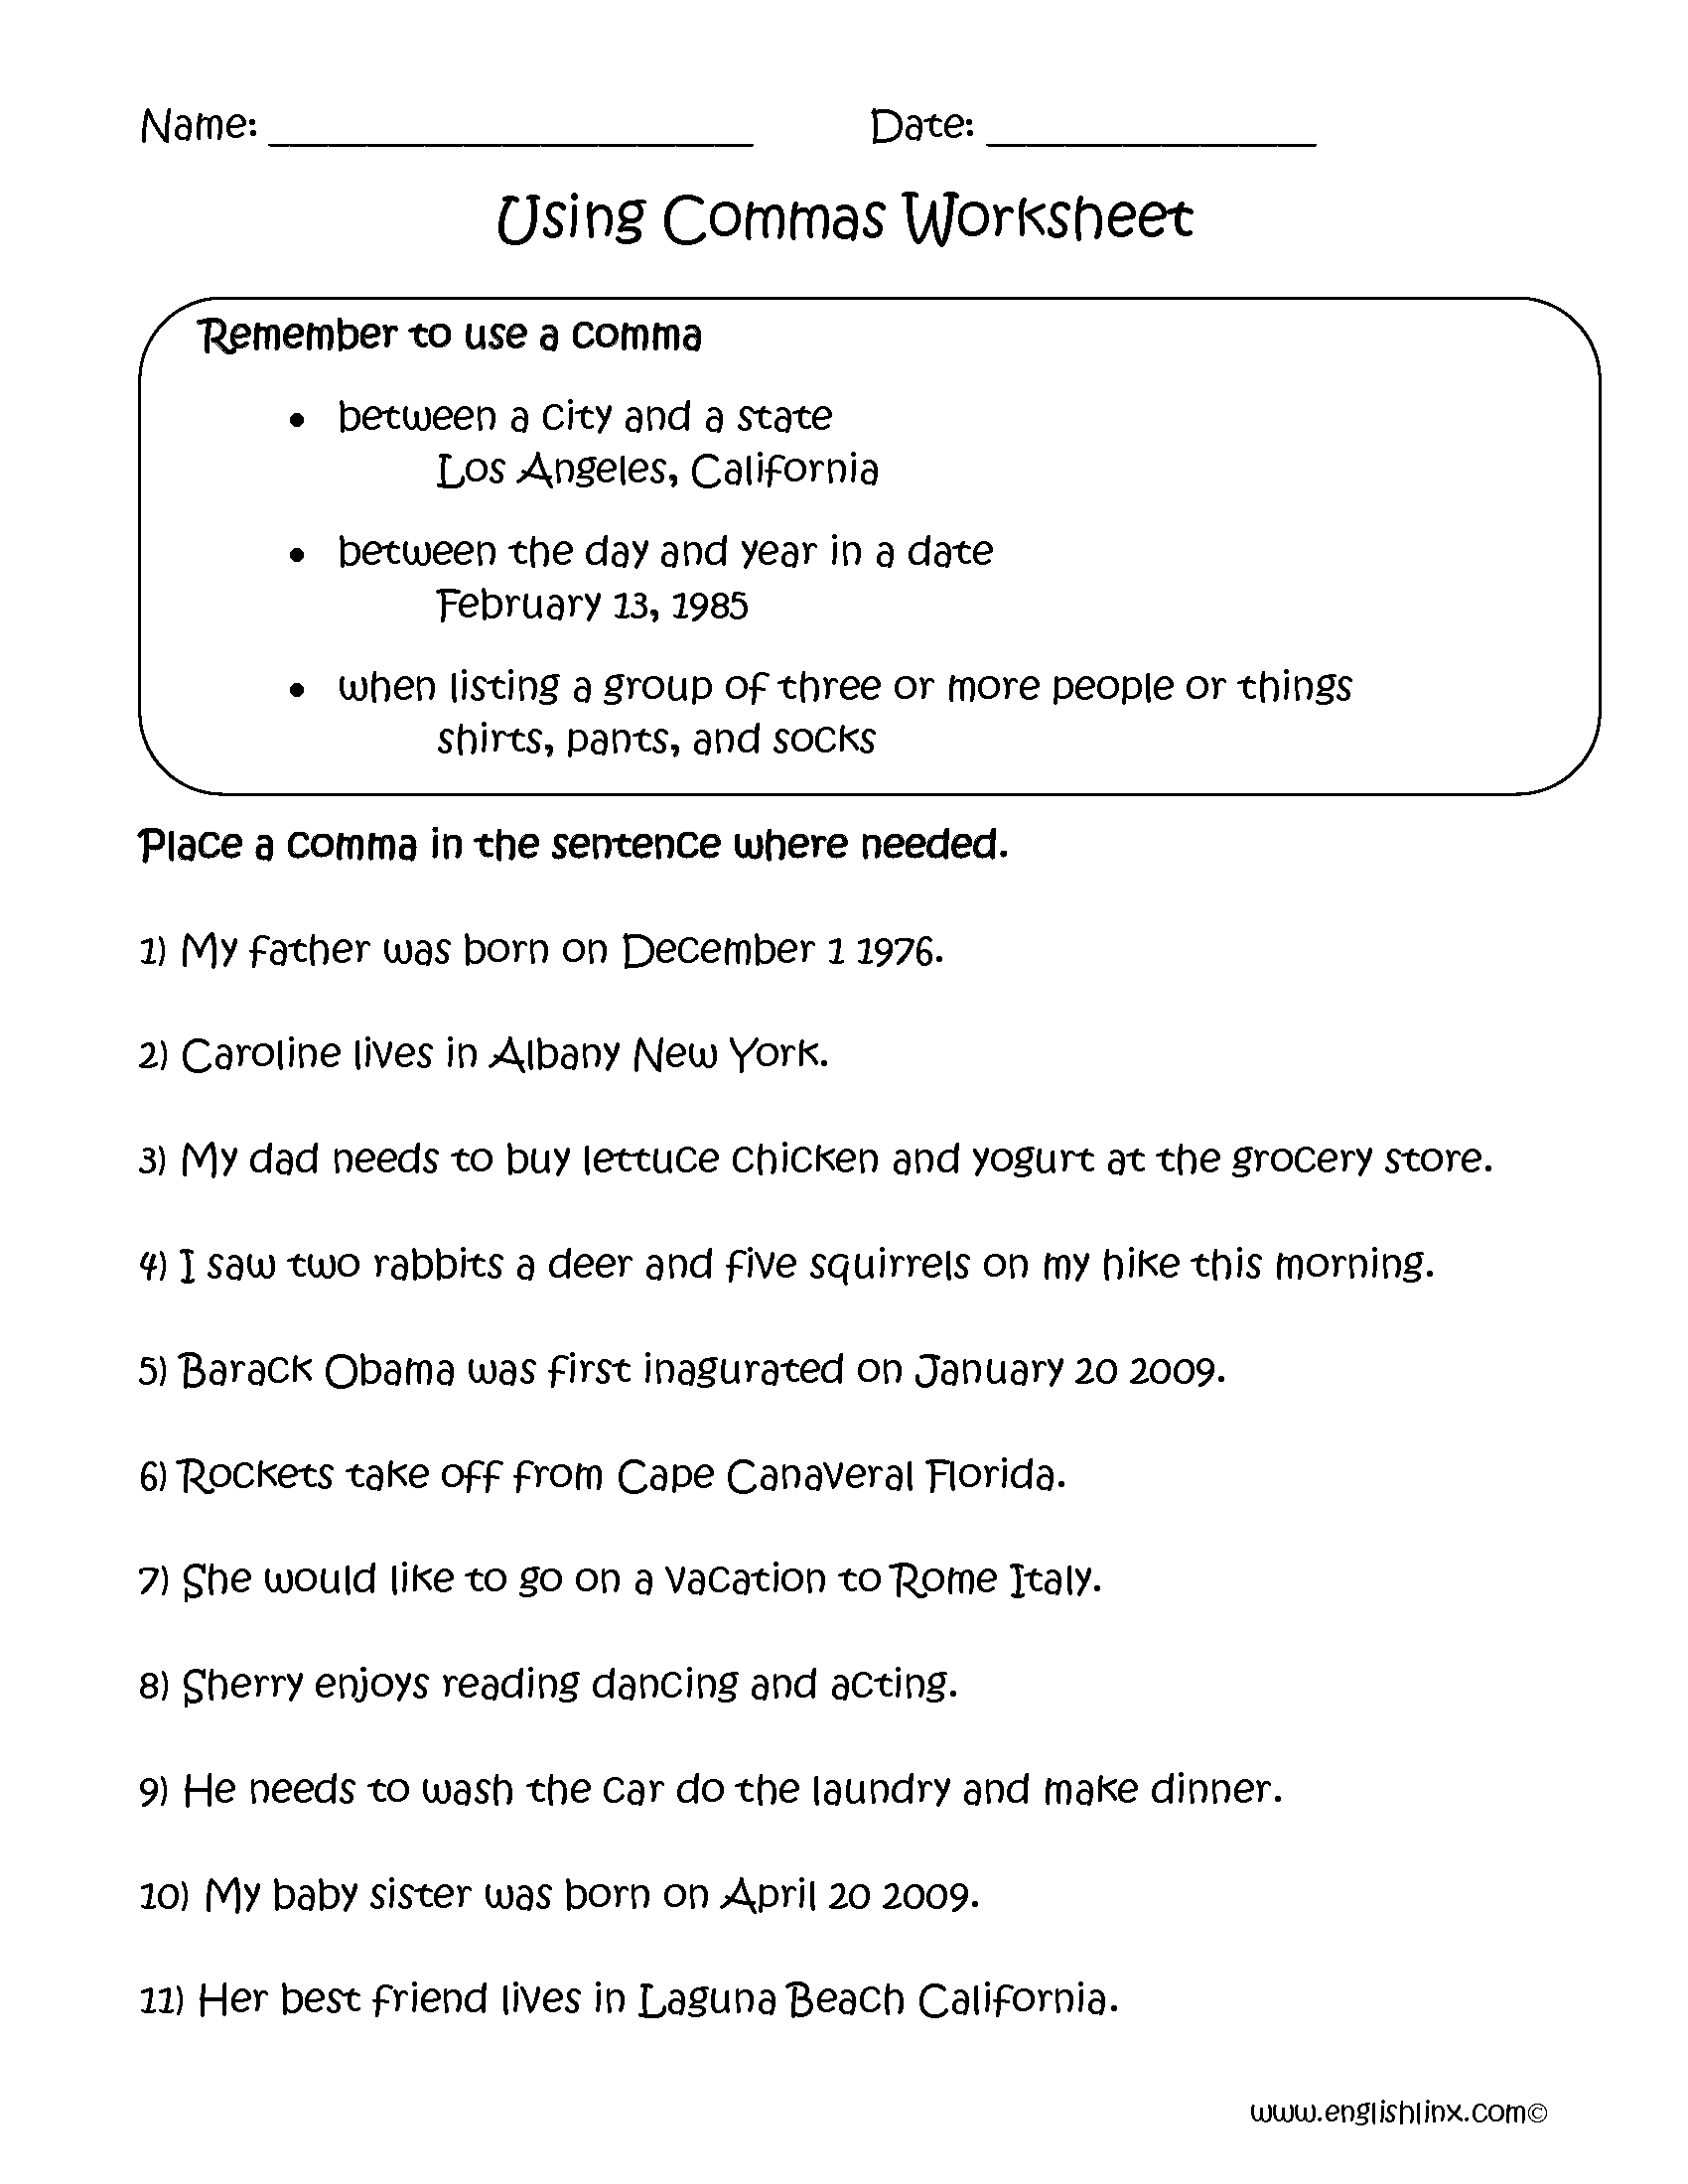 commas-worksheets-using-commas-worksheets